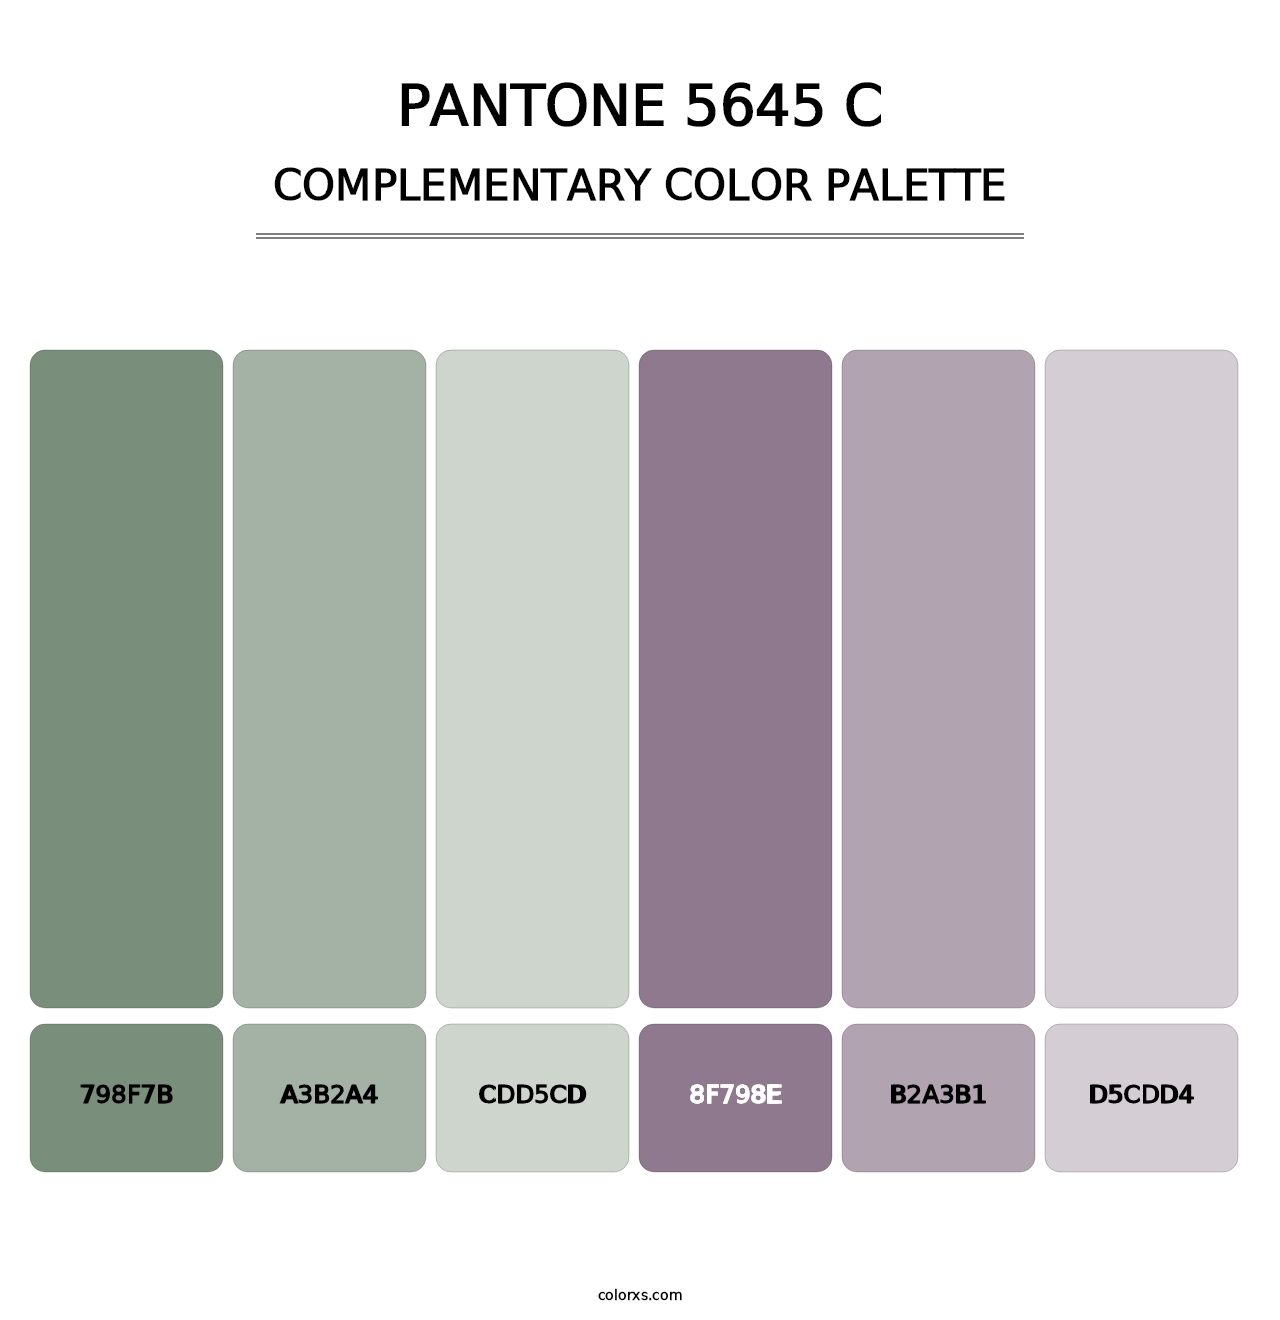 PANTONE 5645 C - Complementary Color Palette